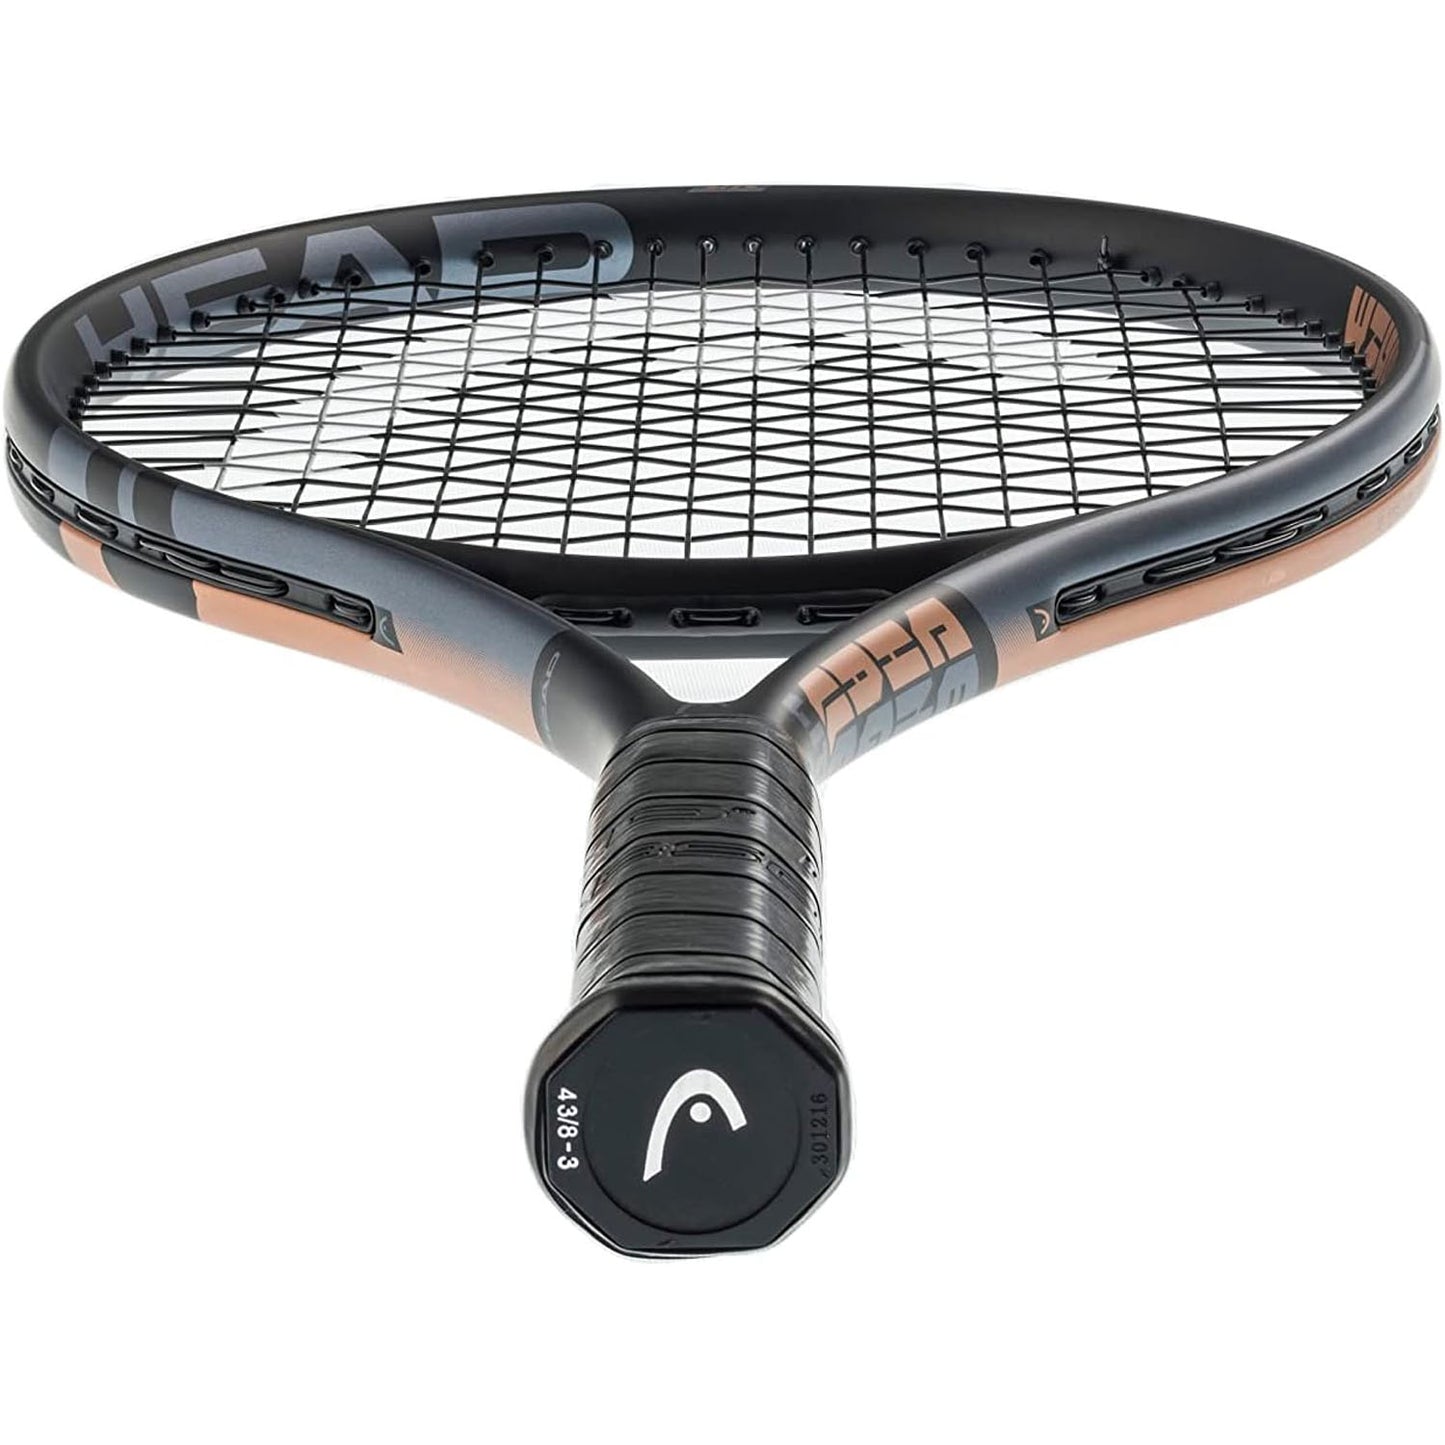 HEAD IG Challenge Lite Strung Tennis Racquet with Full Cover, G3 (Copper) - Best Price online Prokicksports.com